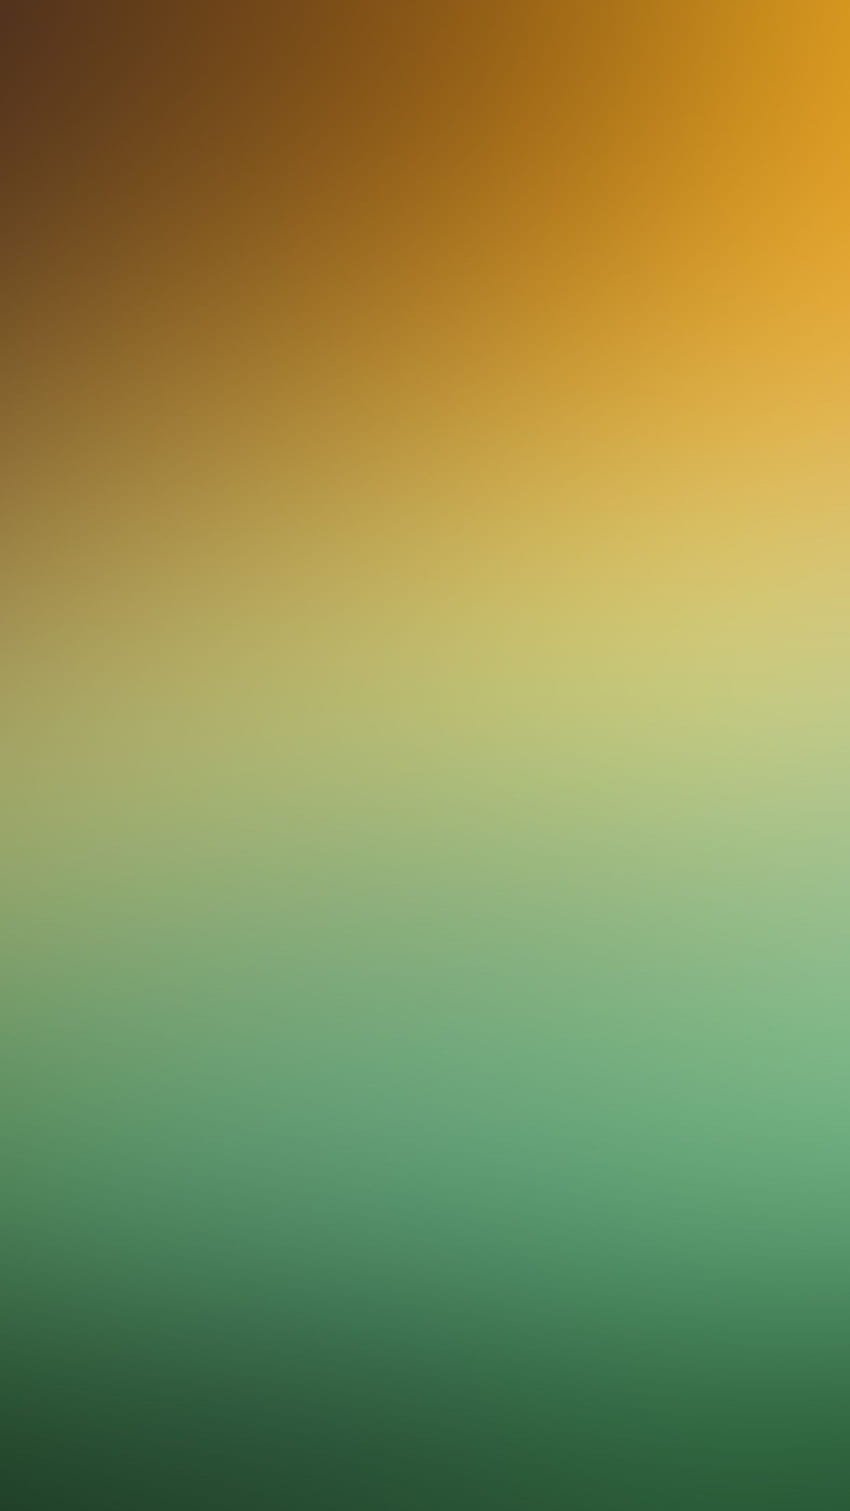 iPhone 6 - blur gradasi lembut kuning hijau wallpaper ponsel HD